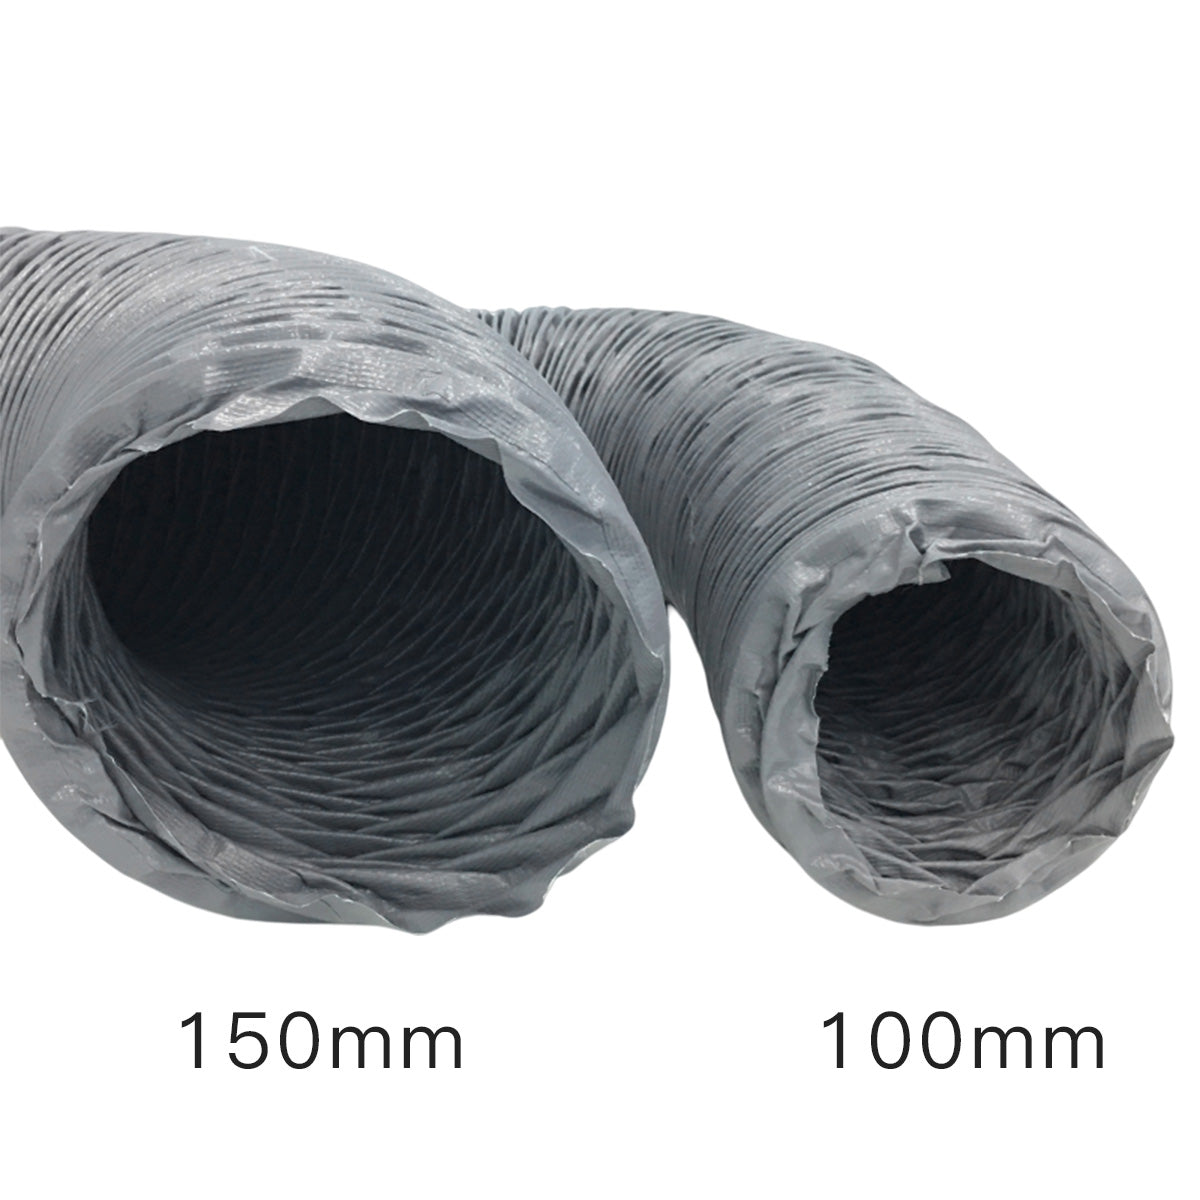 Startnow 3m/Lot 150mm Nylon Fabric Ventilation Pipe Ventilator Hose Plastic Canvas Flexible Telescopic Tube Intake Exhaust Duct